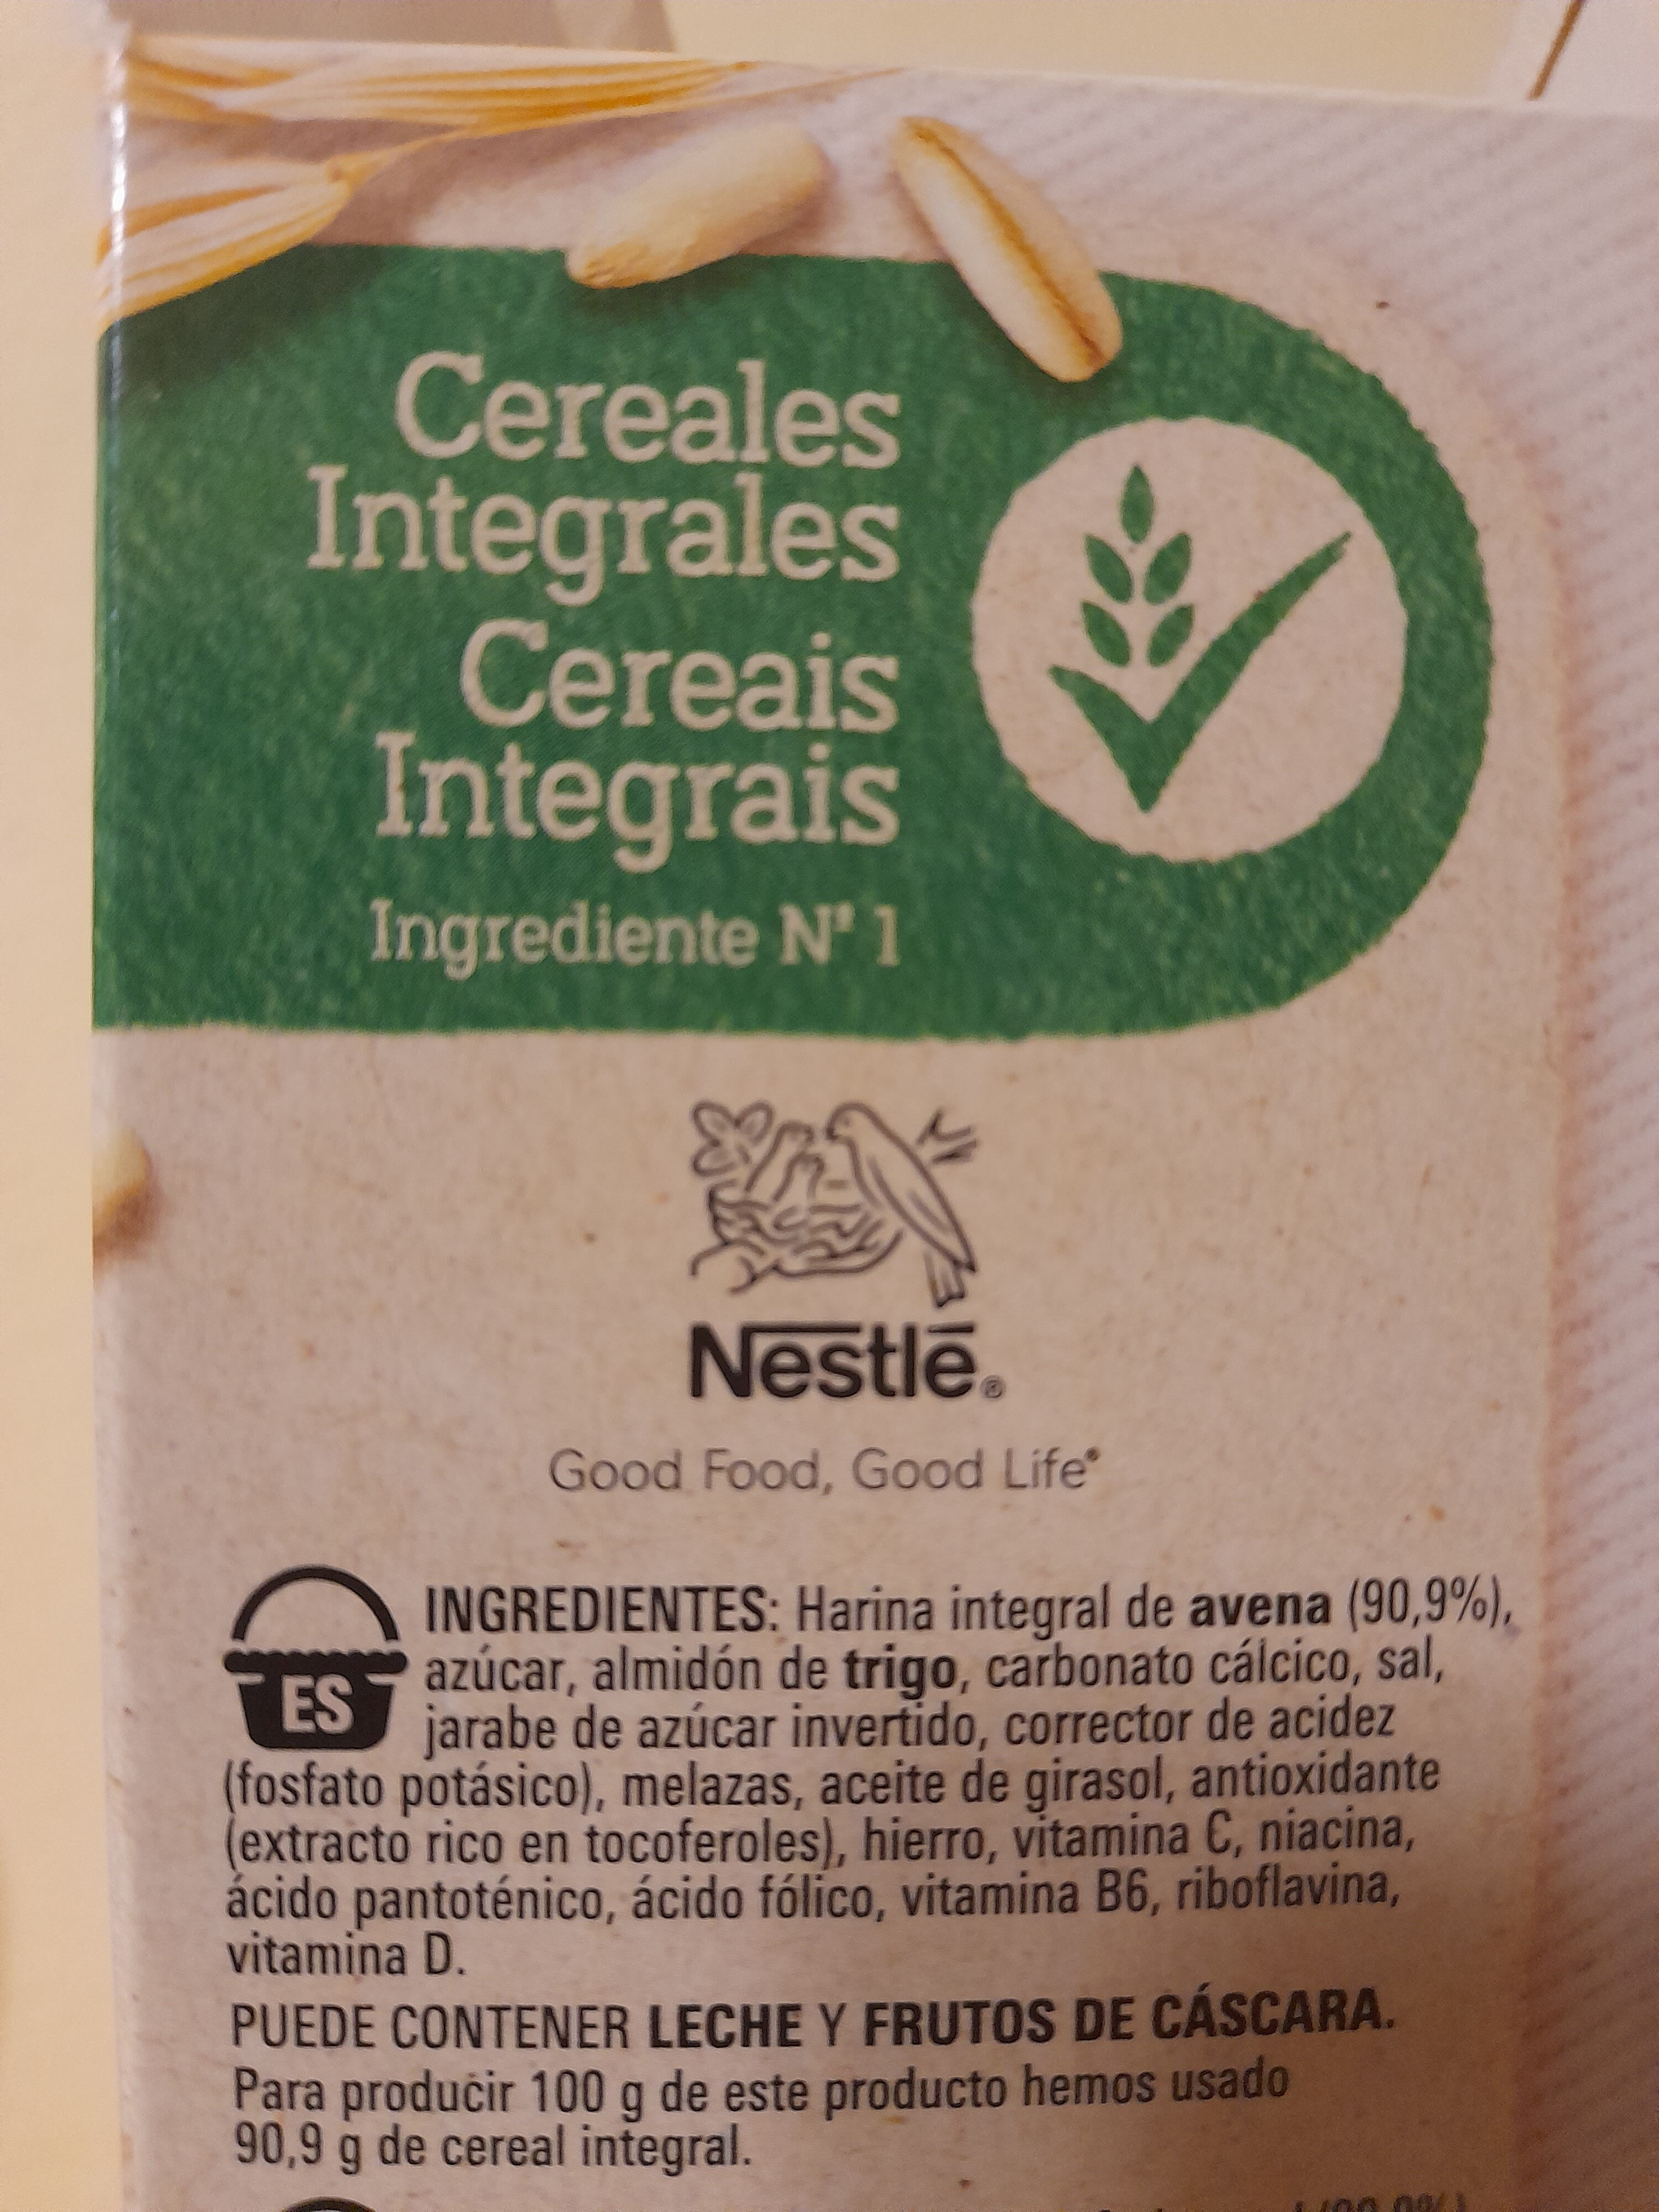 Cheerios avena - Ingredients - es